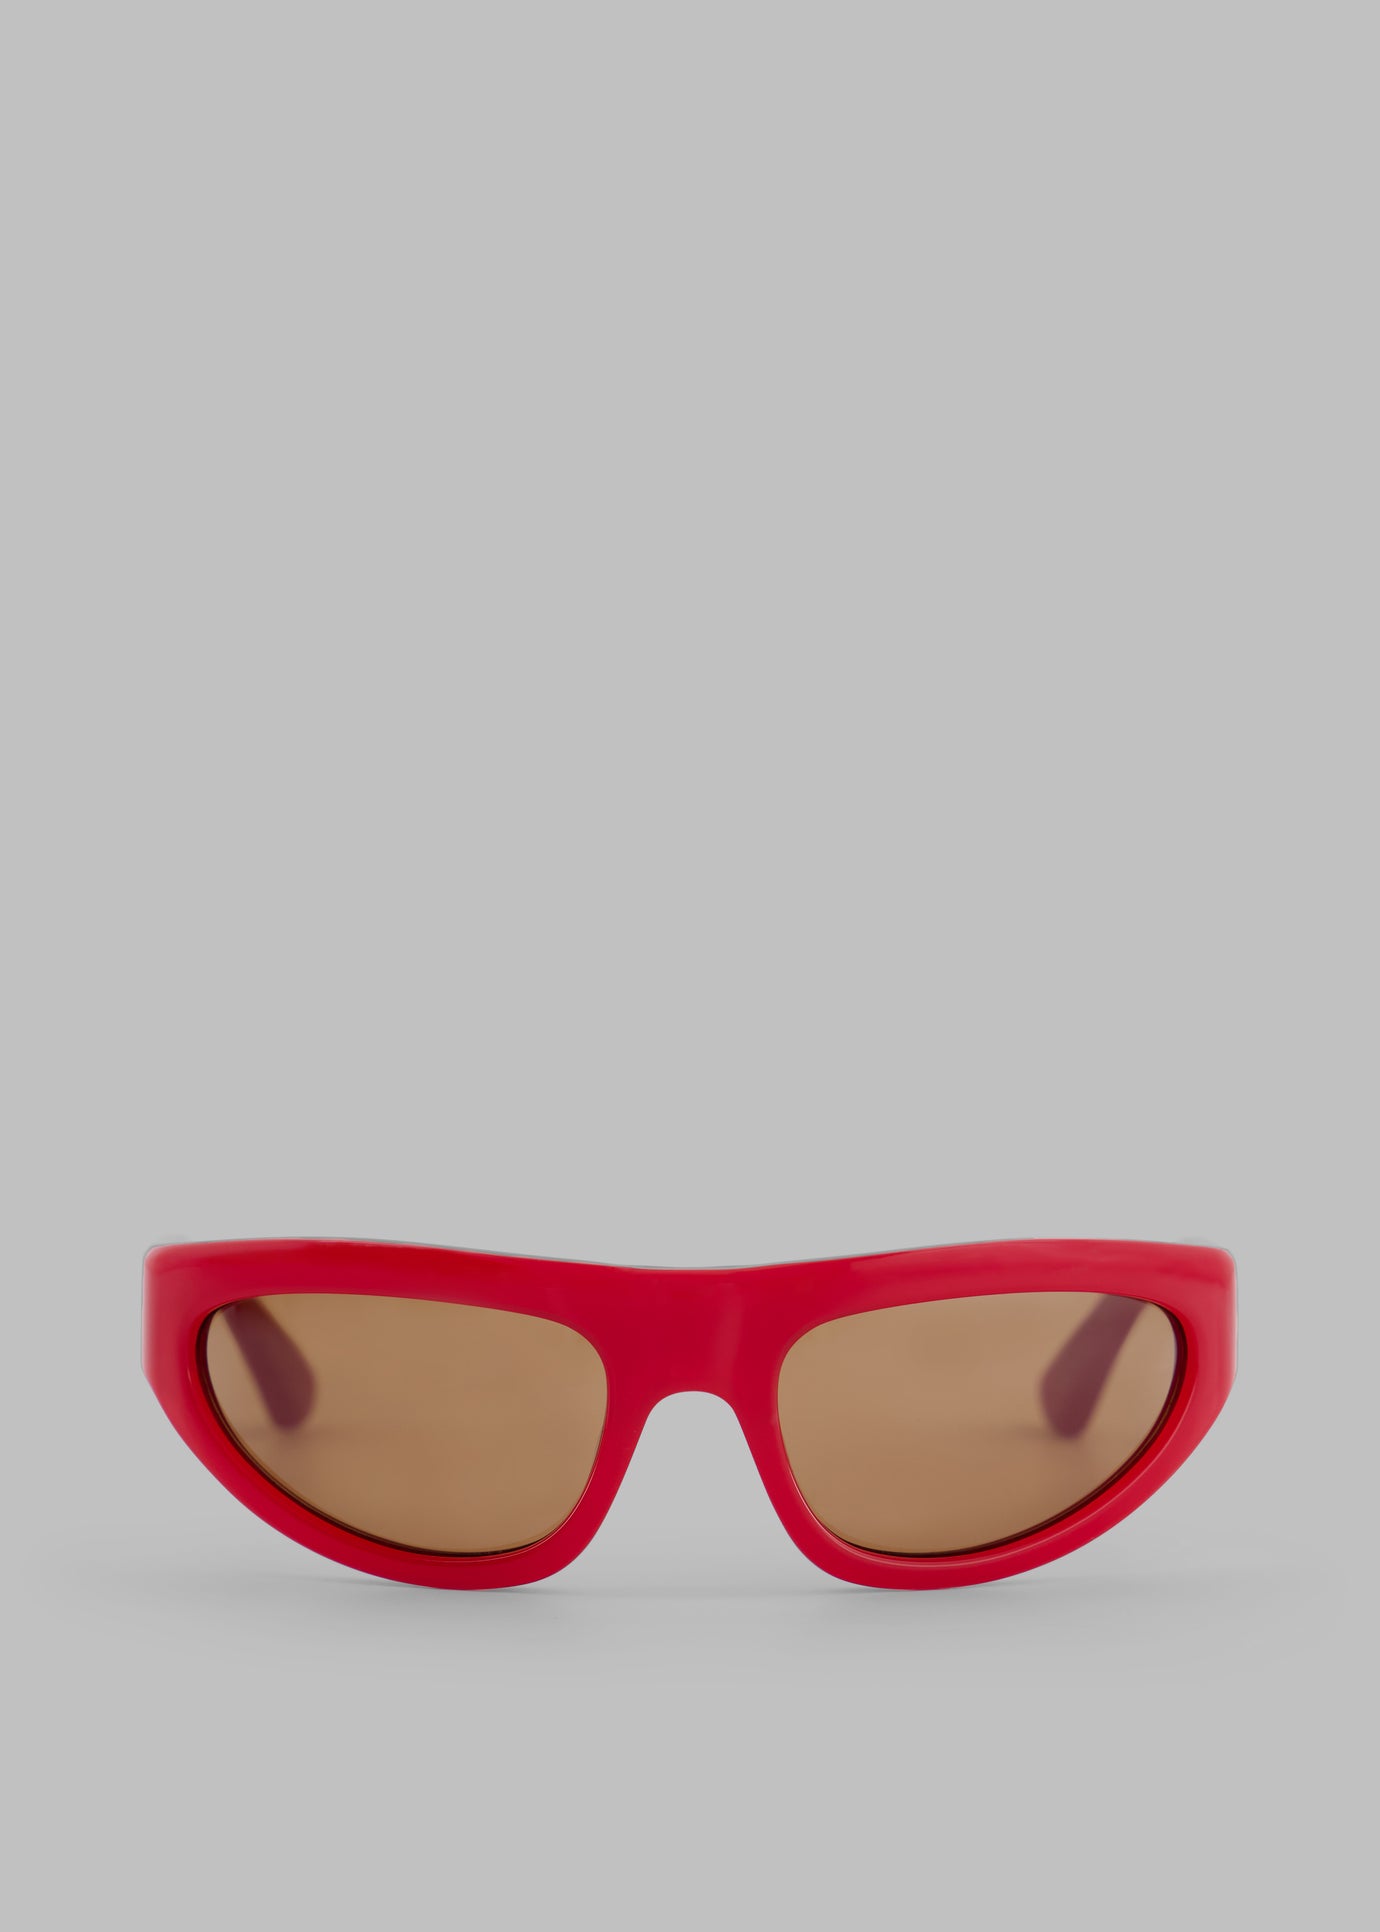 Port Tanger Malick Sunglasses - Incense Red Acetate/Tobacco Lens